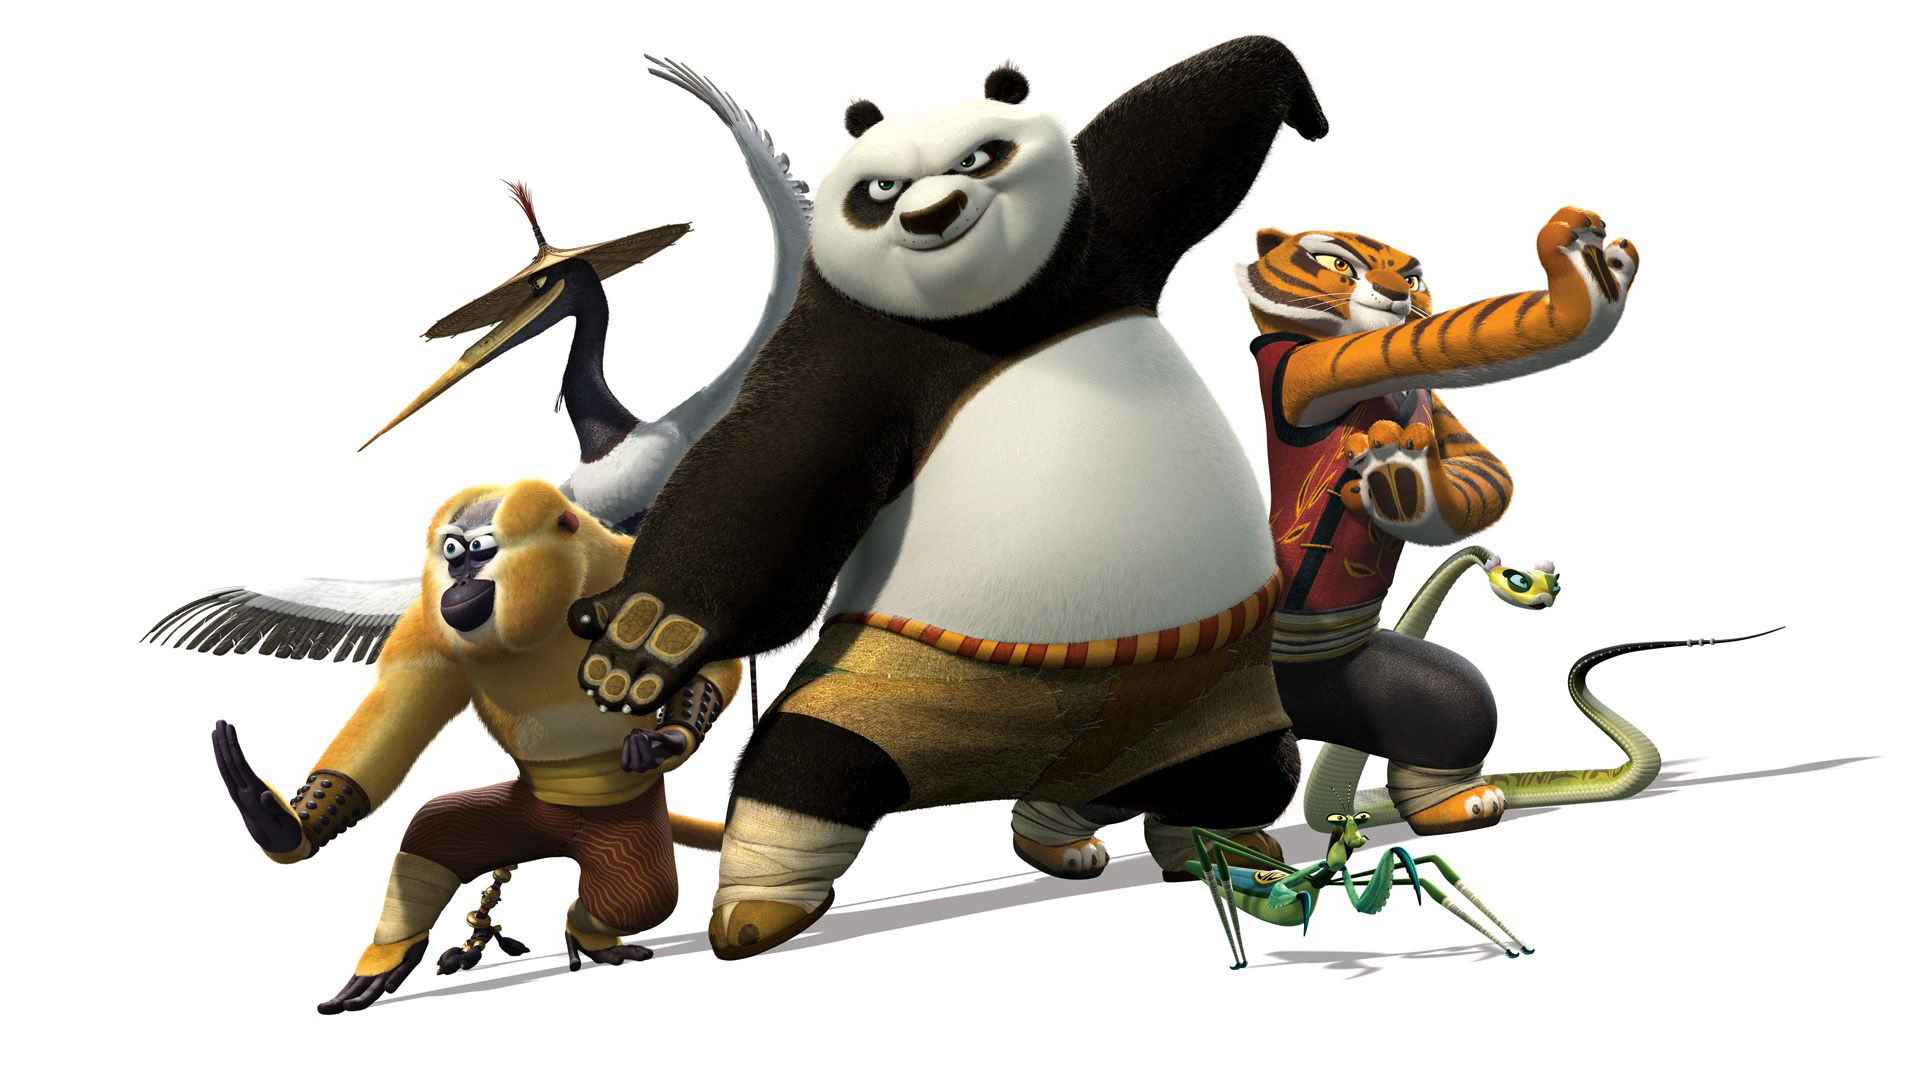 Hoy Les Traigo Wallpaper De Kung Fu Panda En 1080p